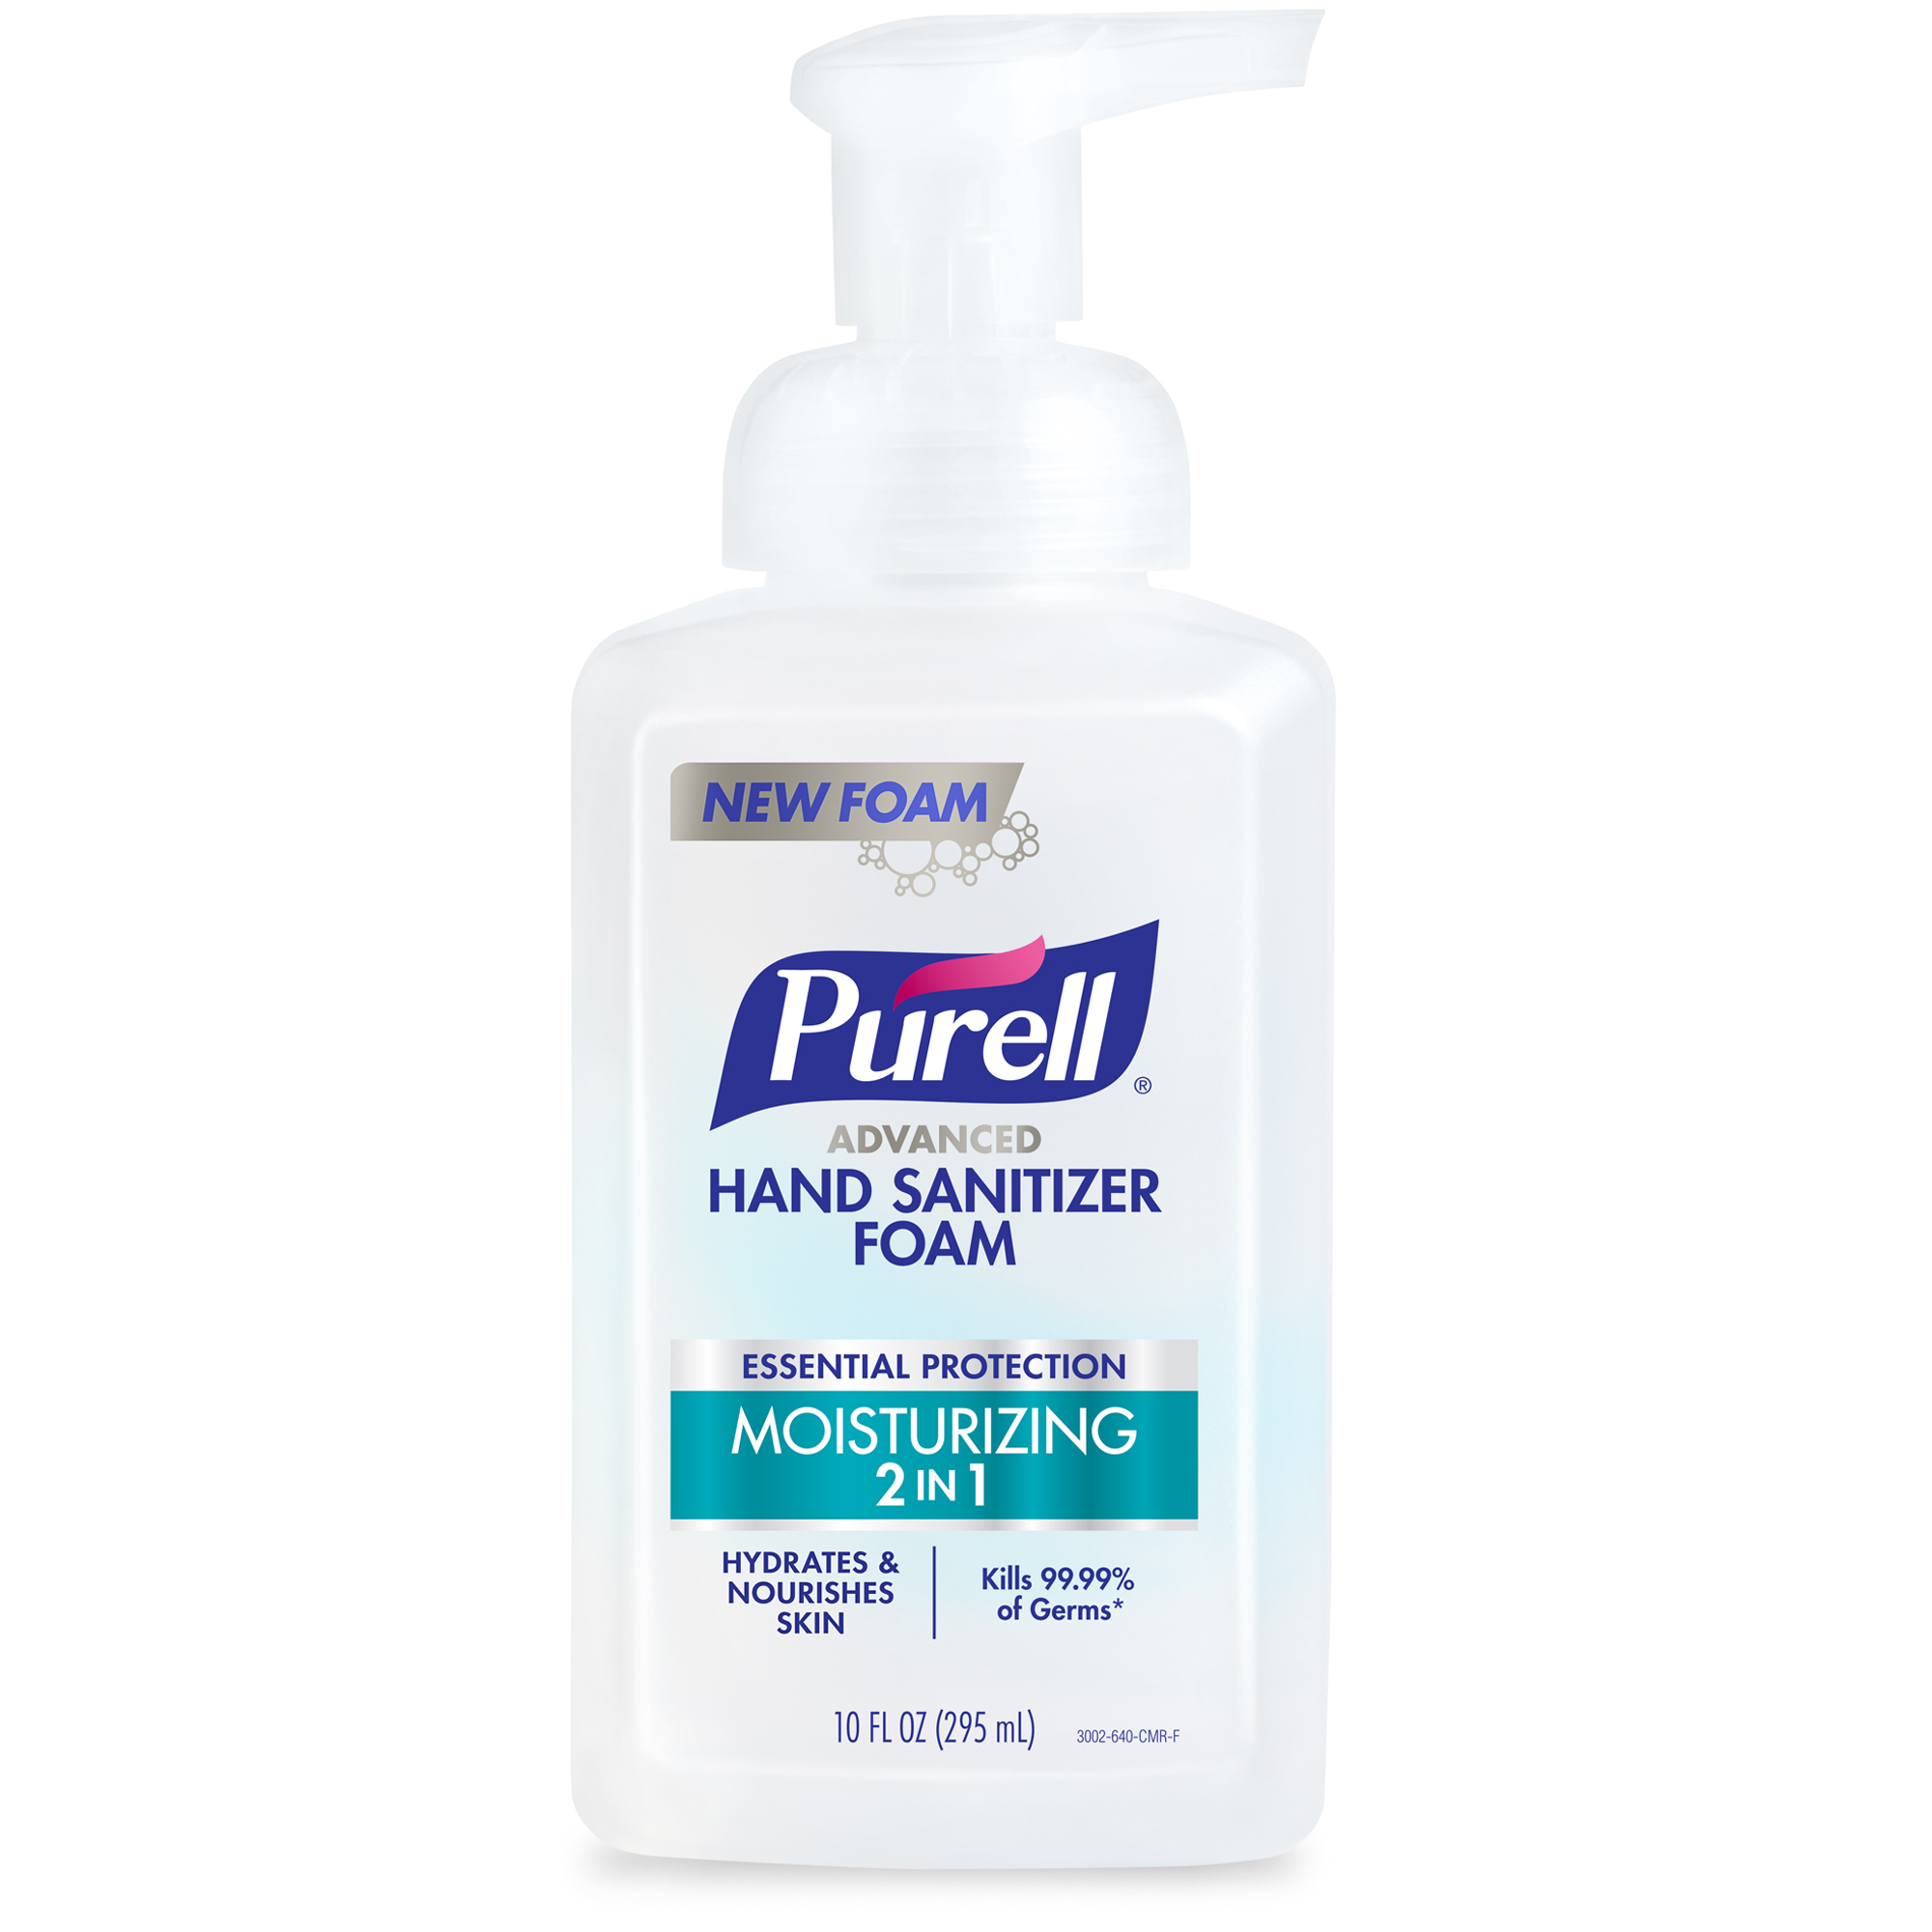 PURELL® 2in1 Moisturizing Advanced Hand Sanitizer Foam, 10 oz Pump Bottle - image 1 of 6